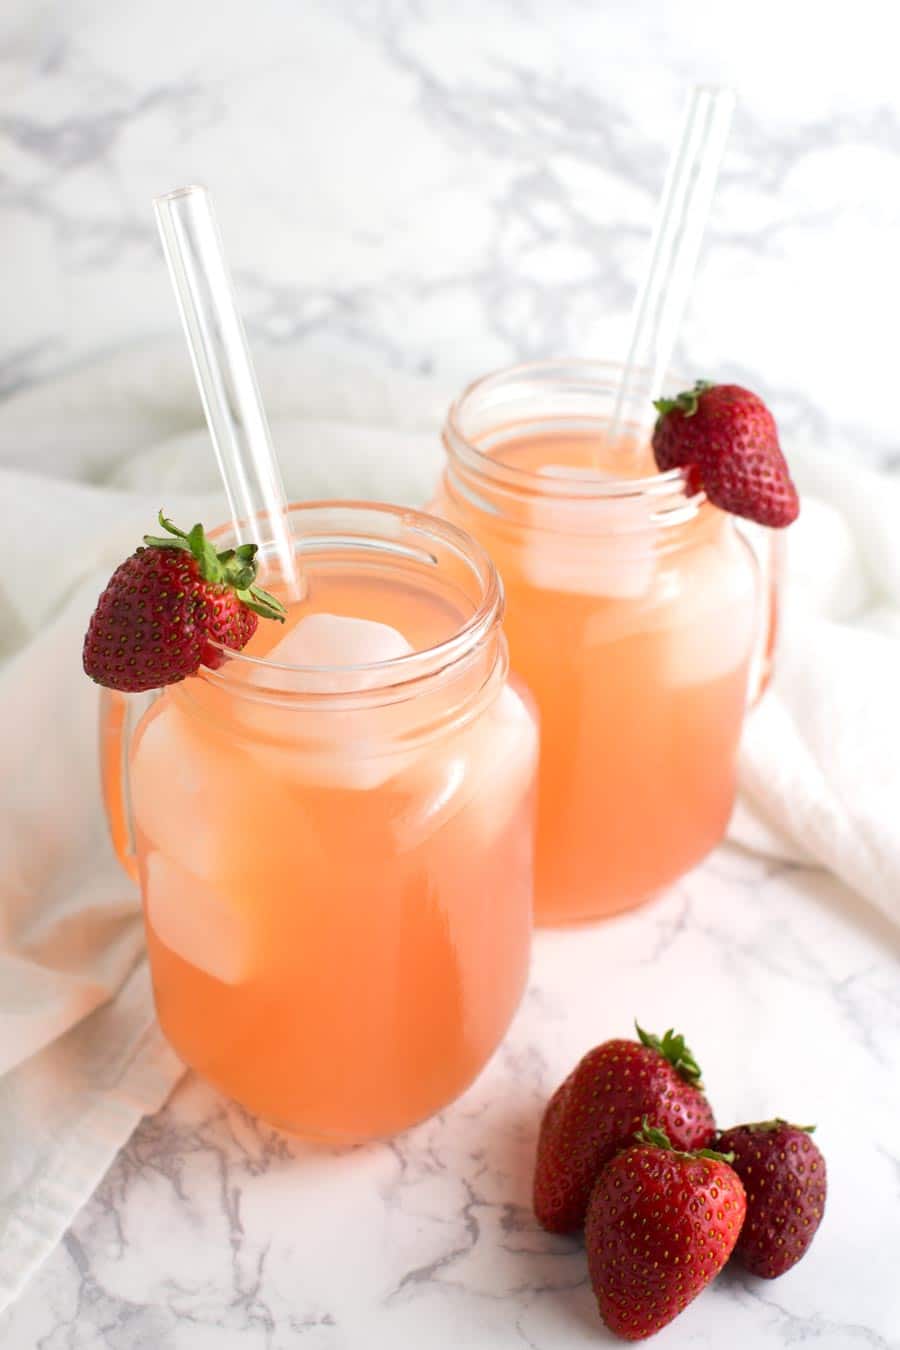 Strawberry Lemonade recipe from acleanplate.com #aip #paleo #autoimmuneprotocol